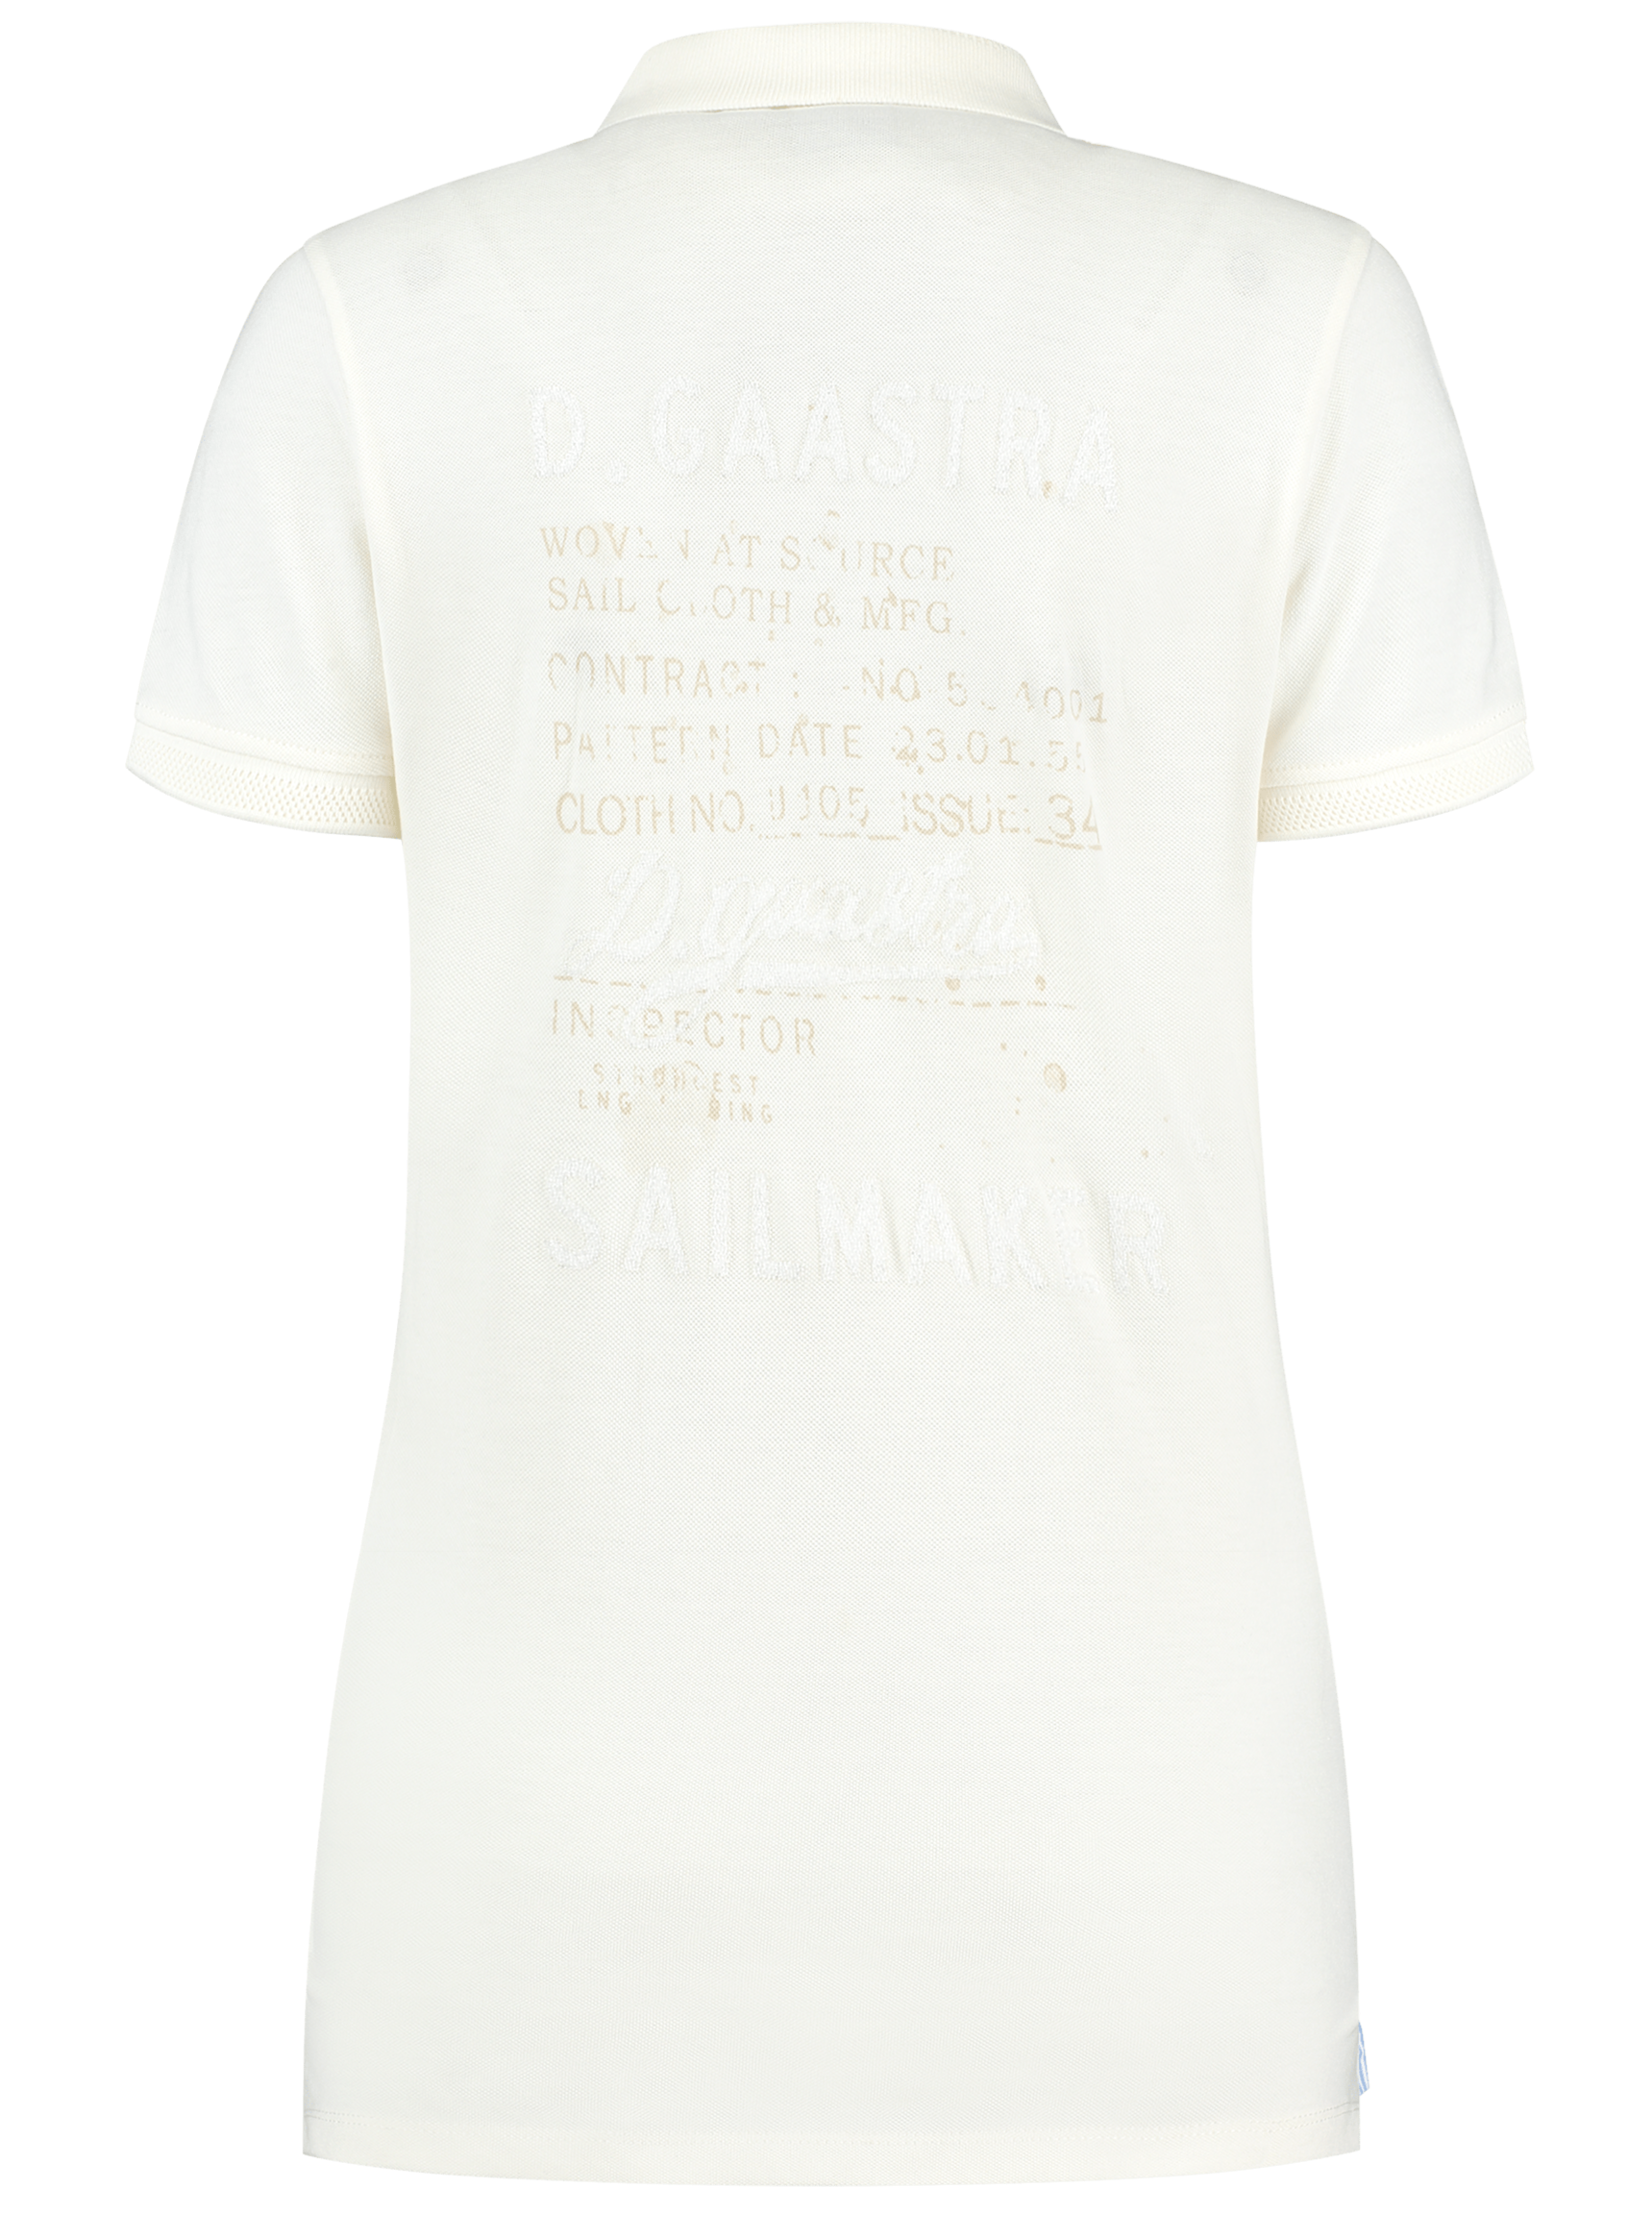 GaastraPolo shirt "Port Vauban" - 100% cotton - off-white